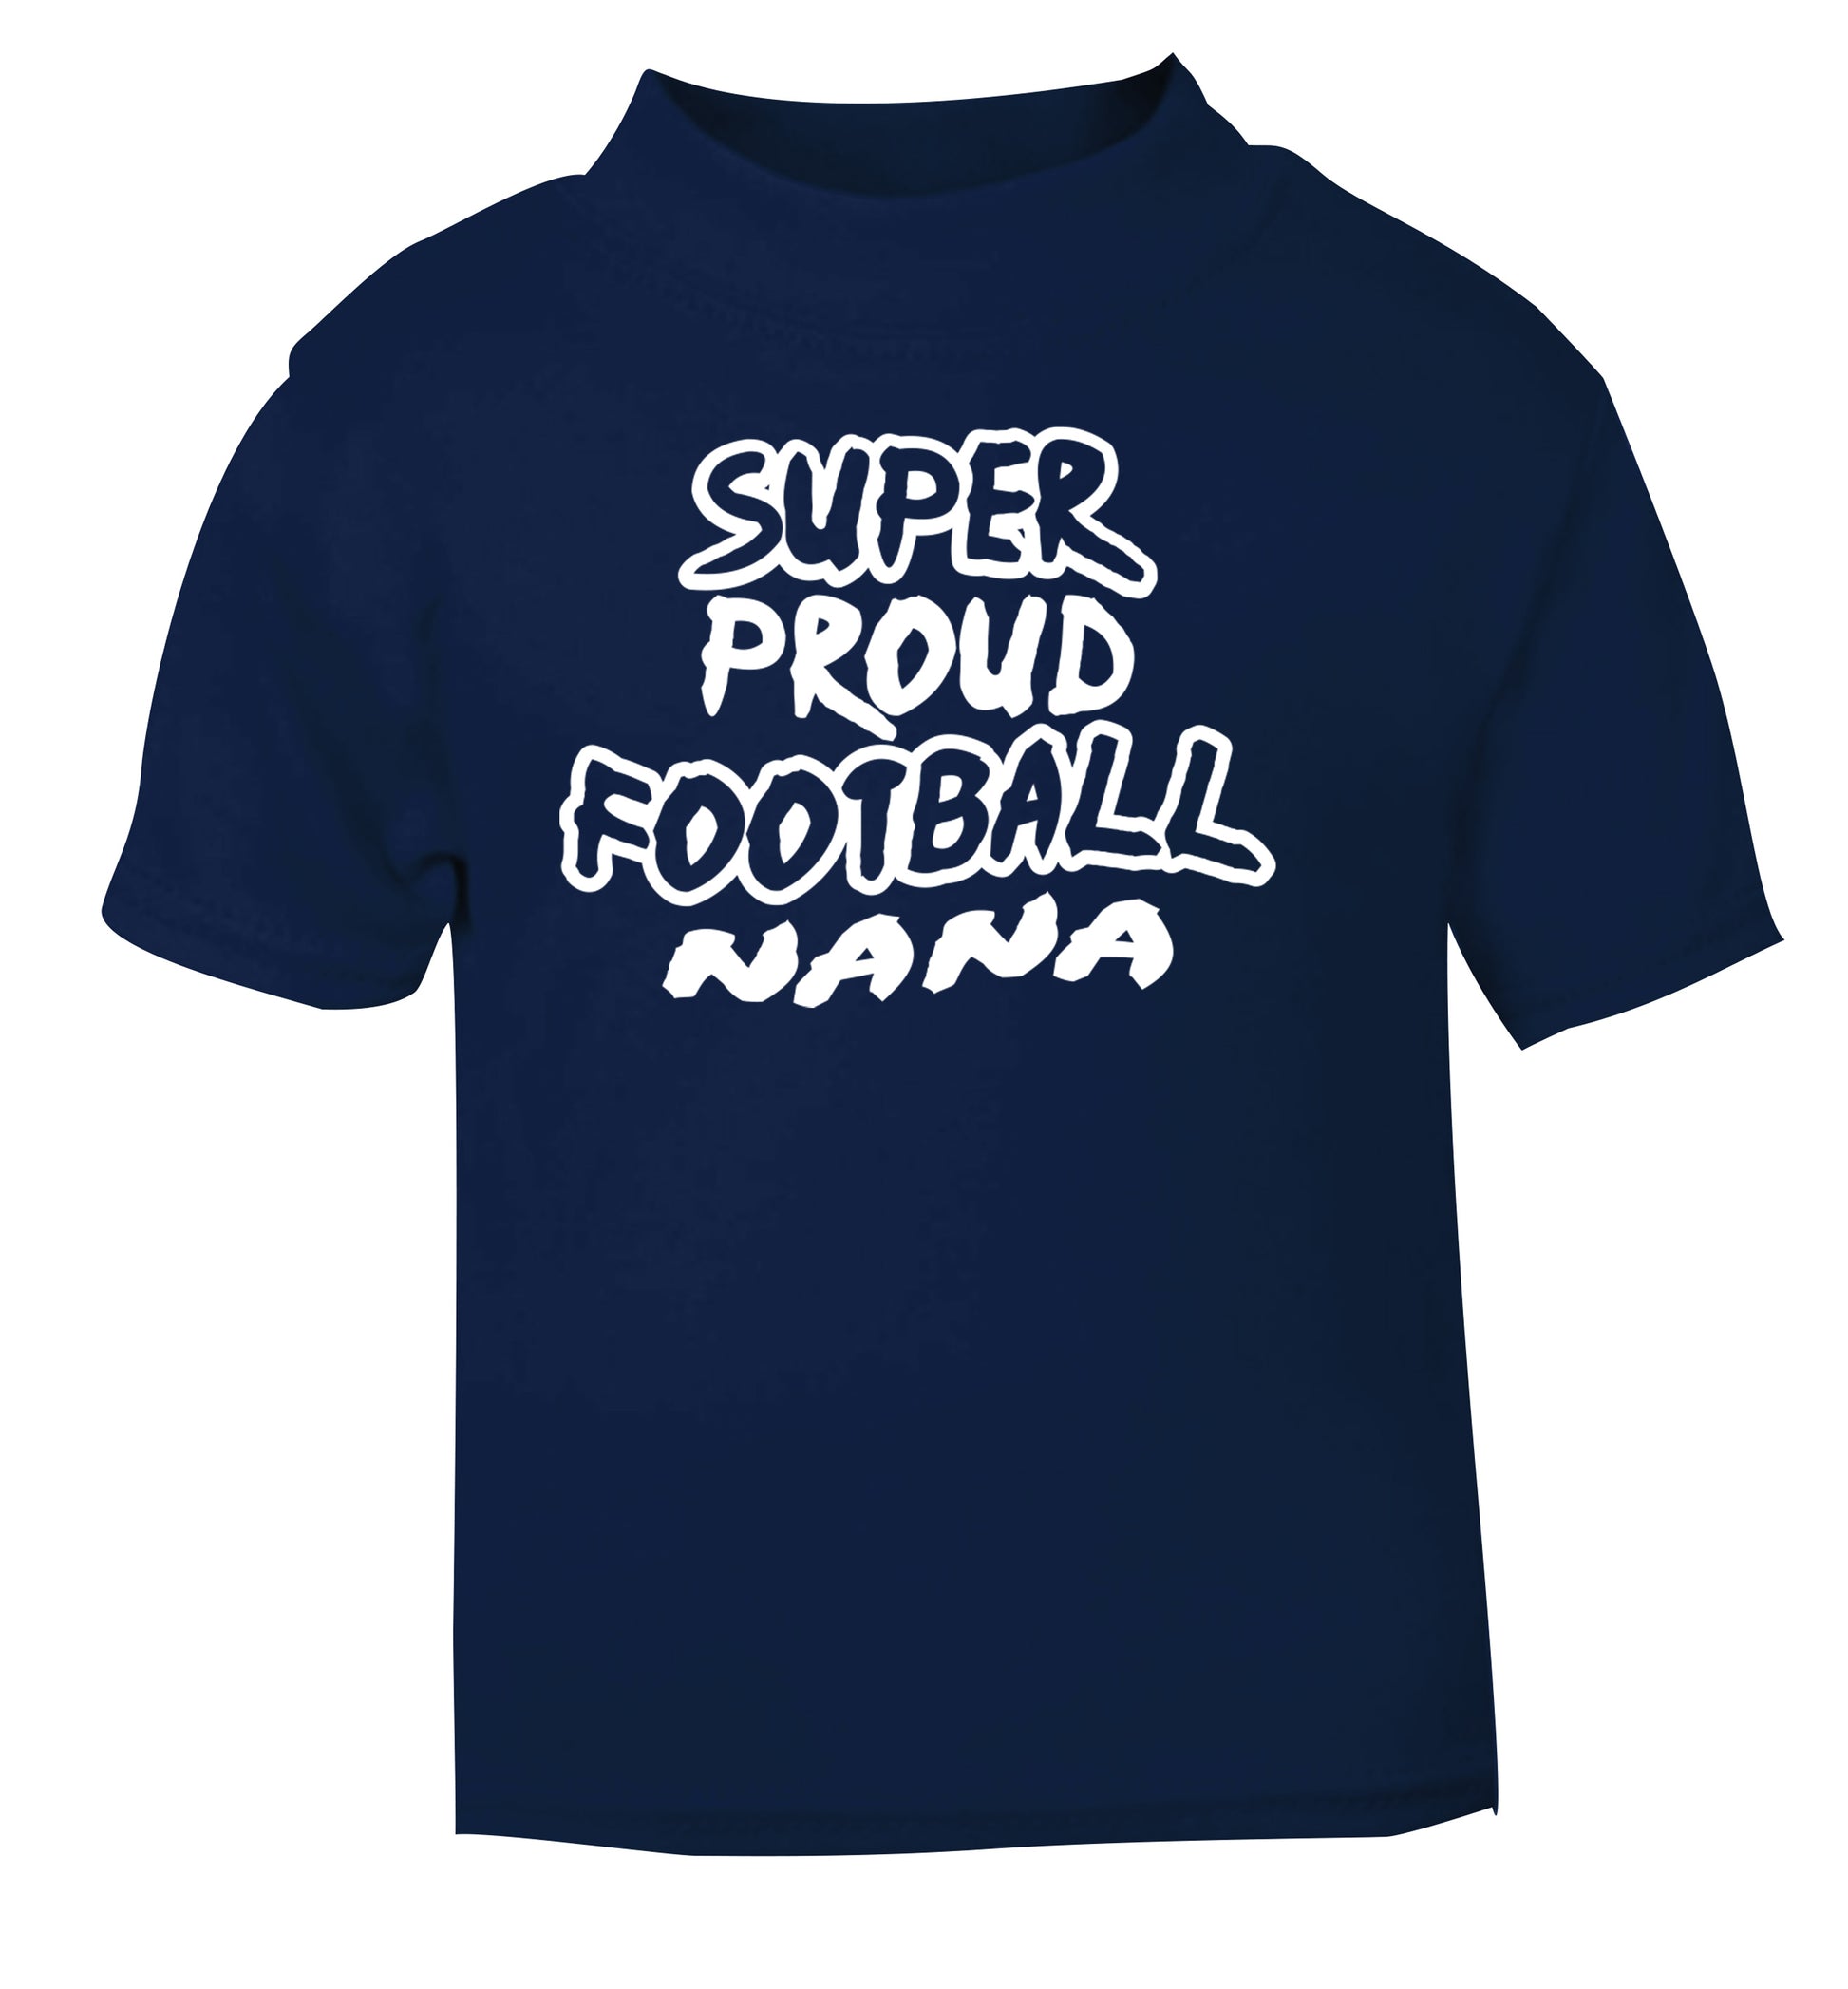 Super proud football nana navy Baby Toddler Tshirt 2 Years